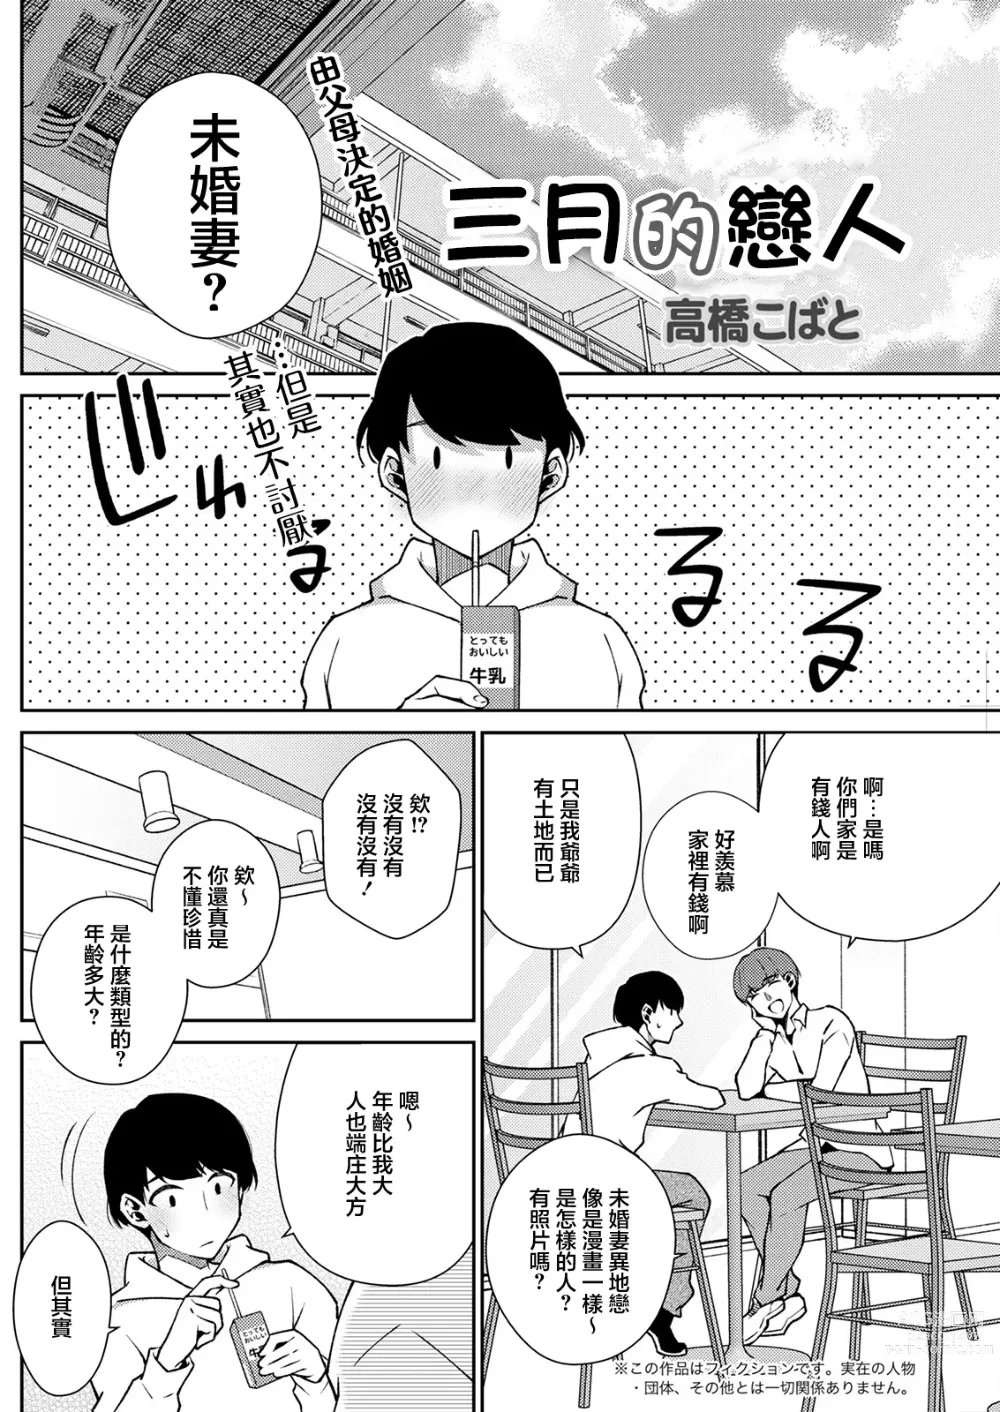 Page 2 of manga 三月的戀人